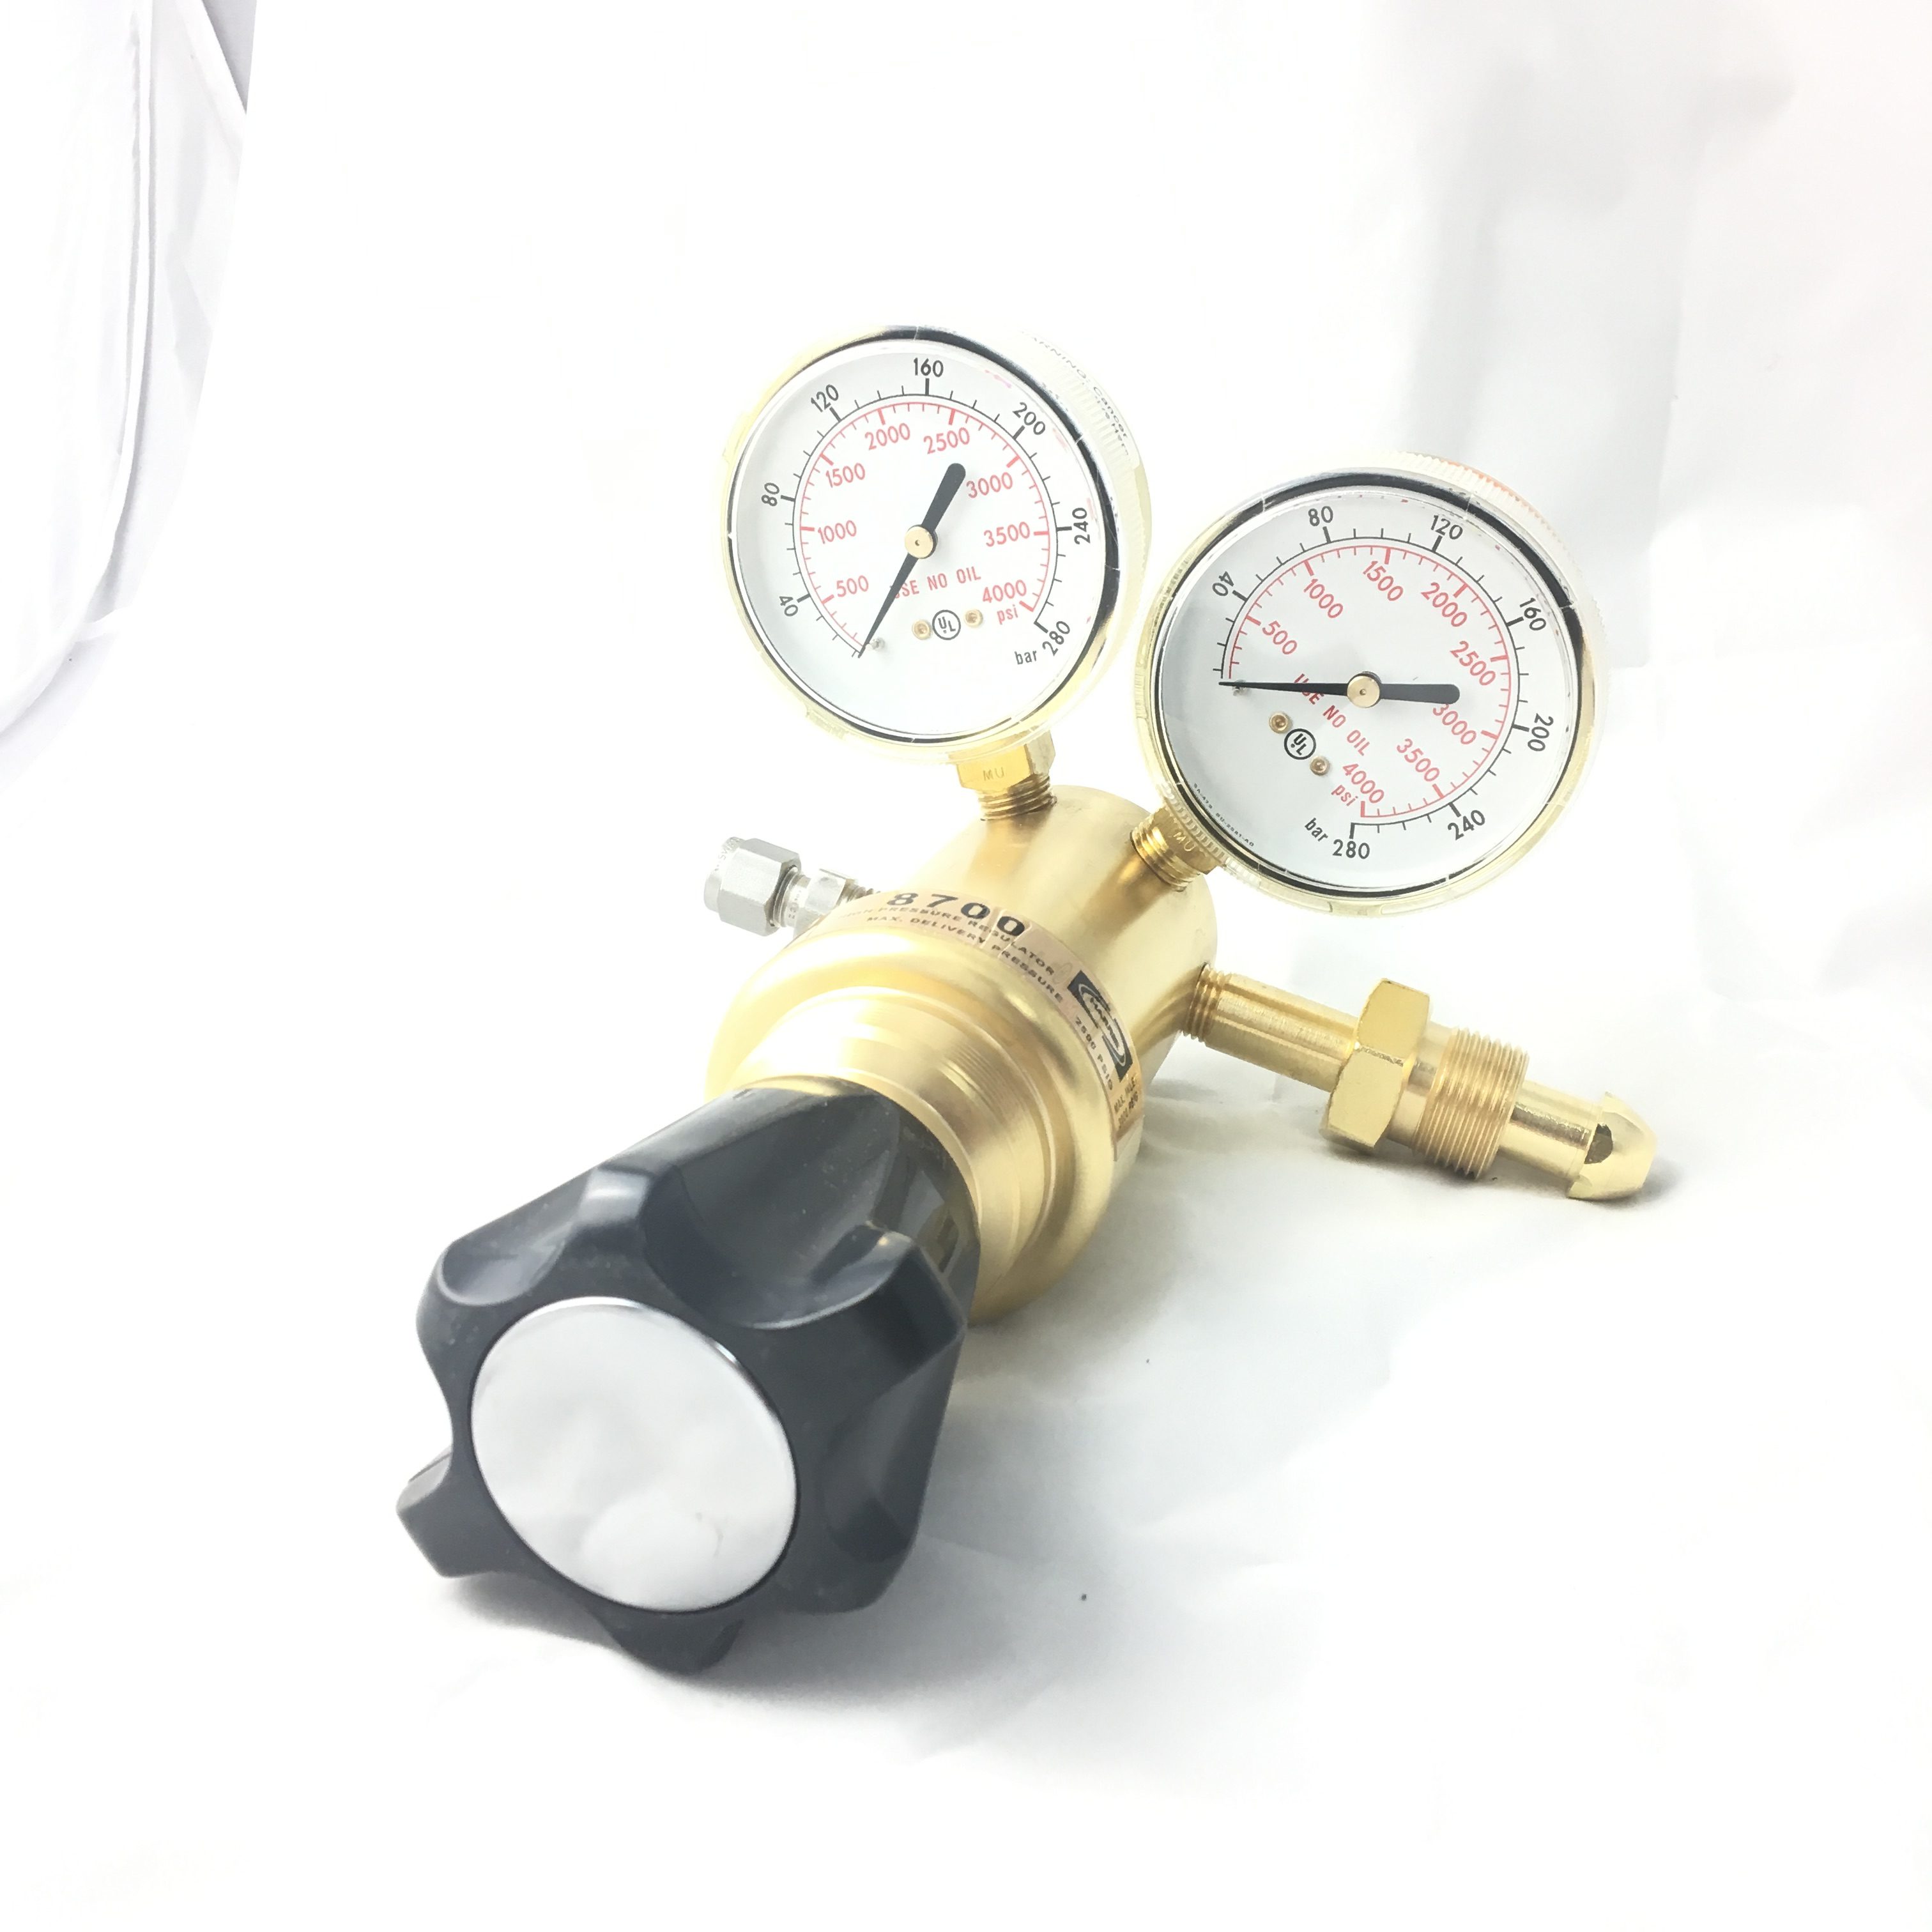 New Nitrogen Regulator Gas Regulator Pressure Gauge 